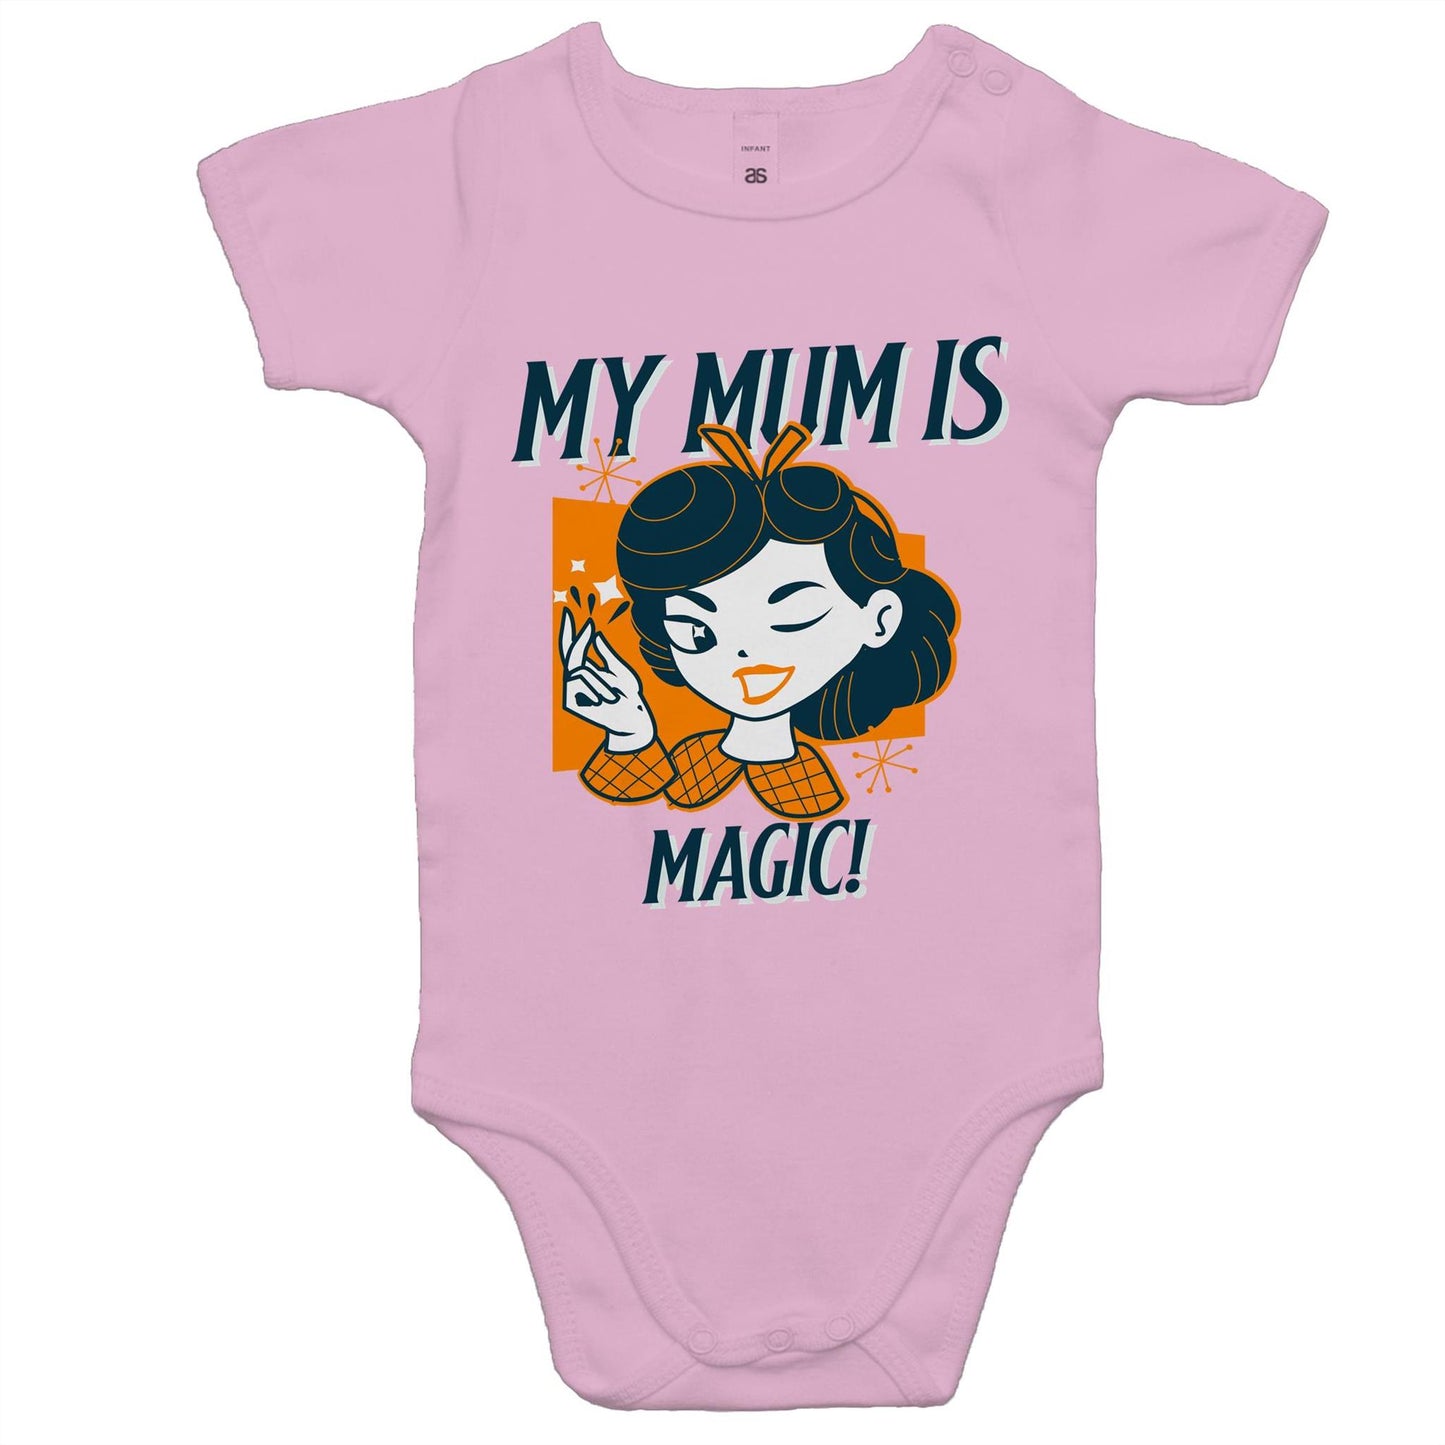 My Mum Is Magic - Baby Bodysuit Pink Baby Bodysuit Mum Retro